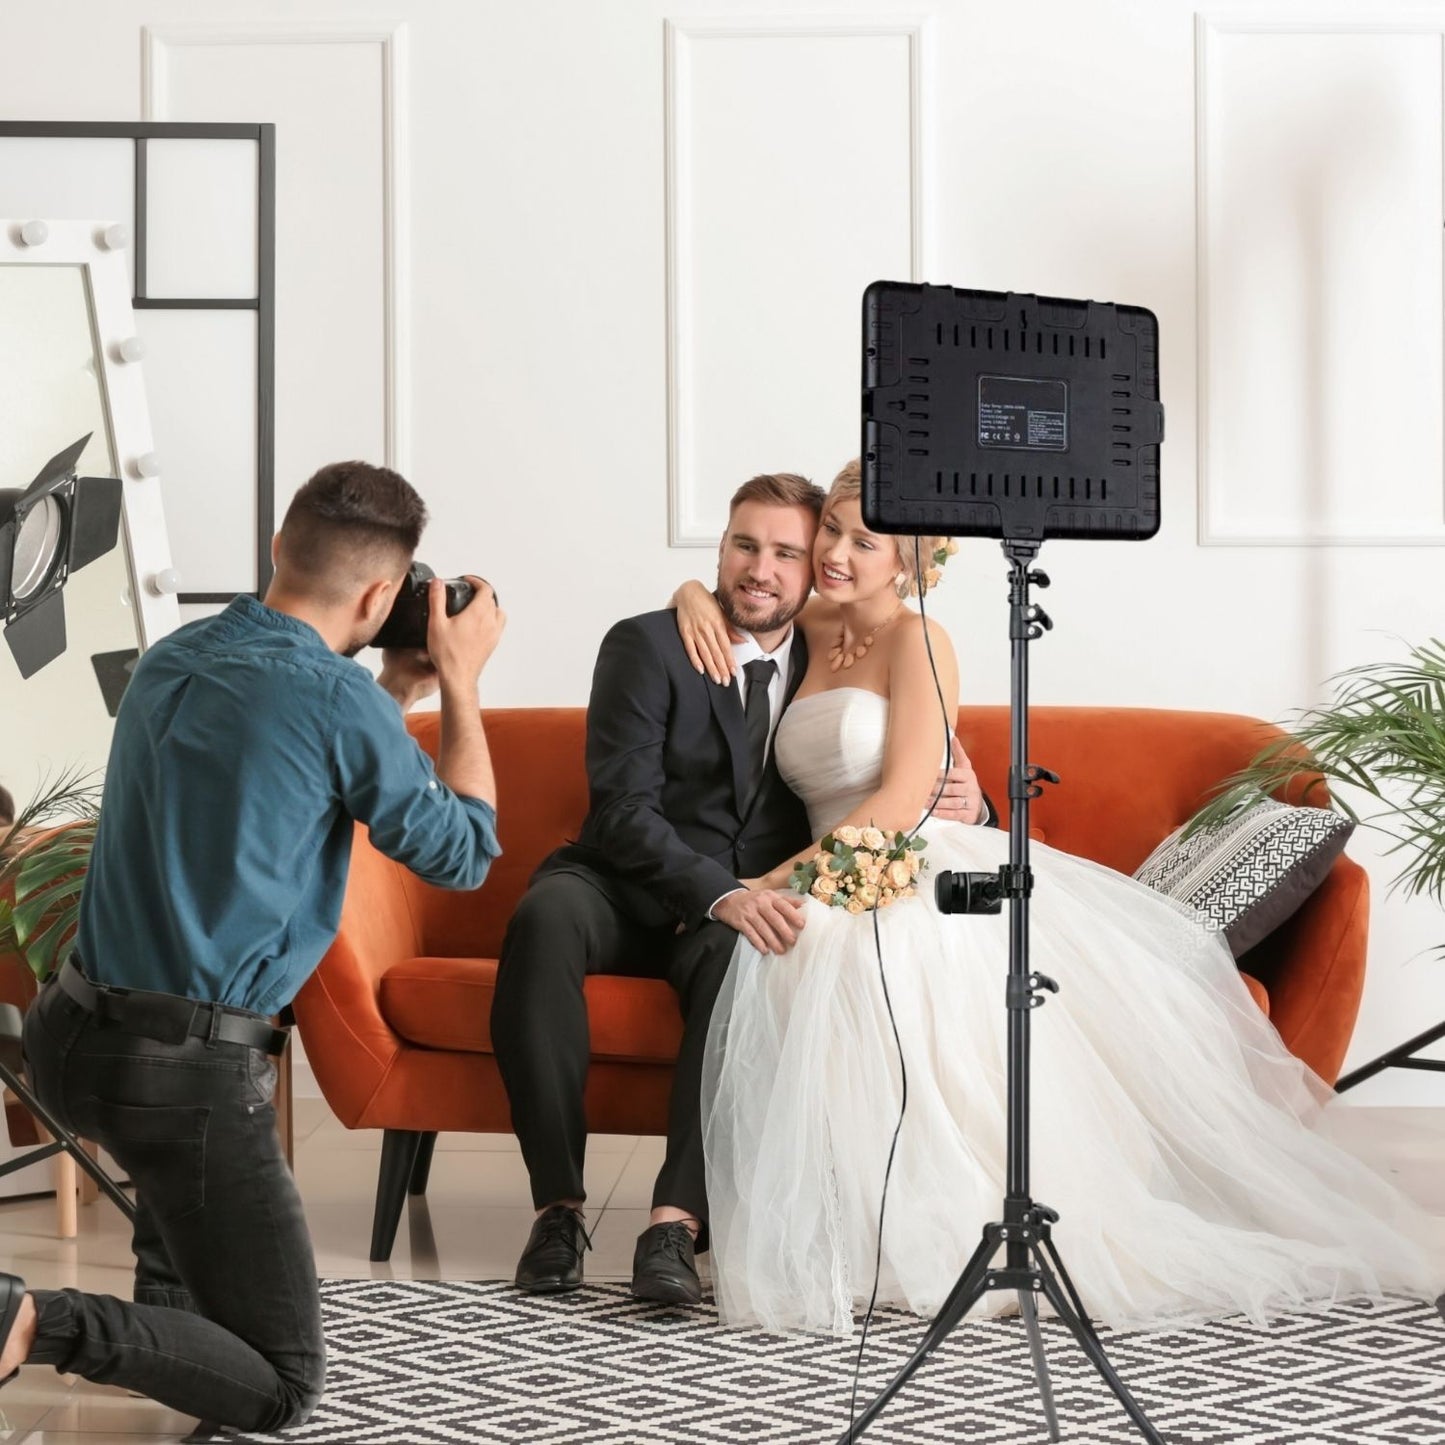 StudioPro Panel Lighting use by wedding photographer